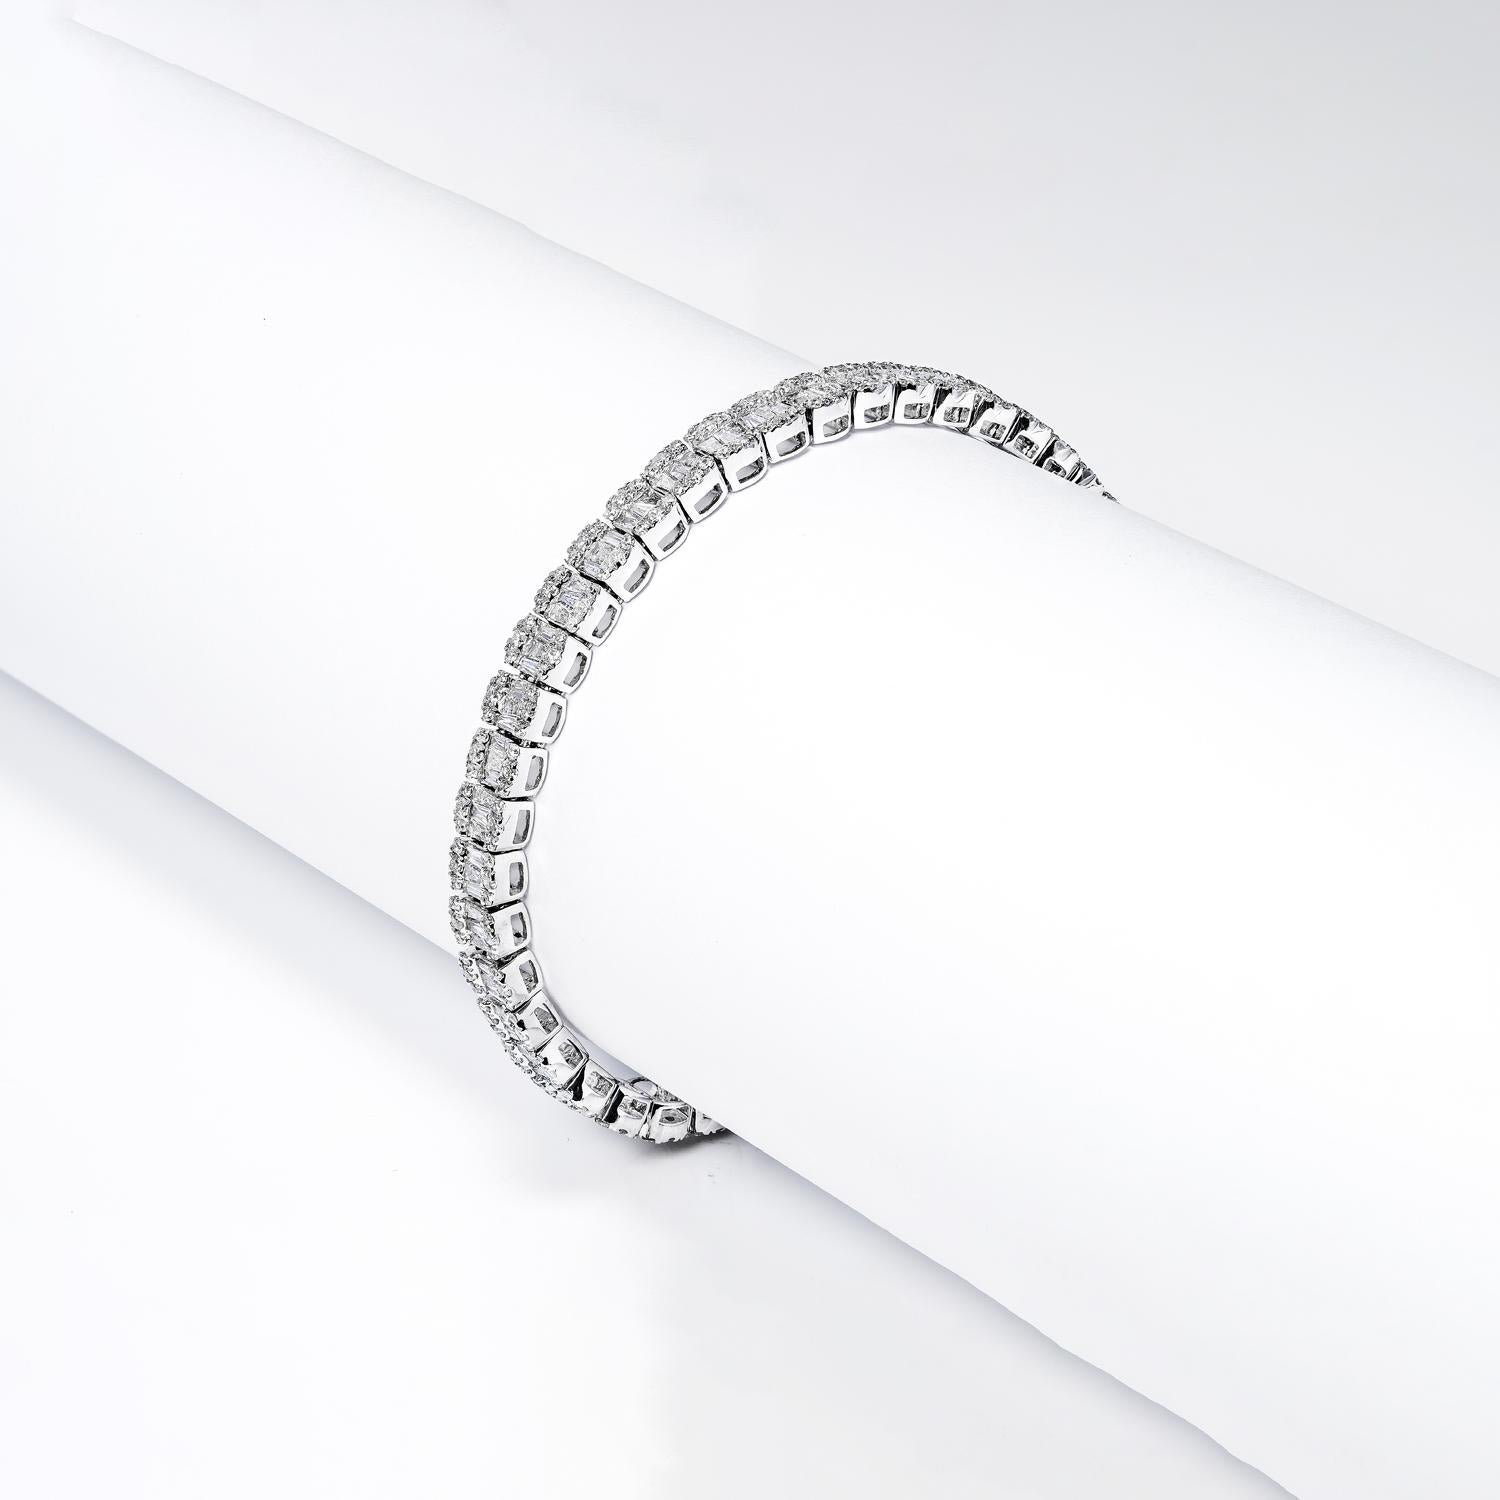 6 carat diamond tennis bracelet